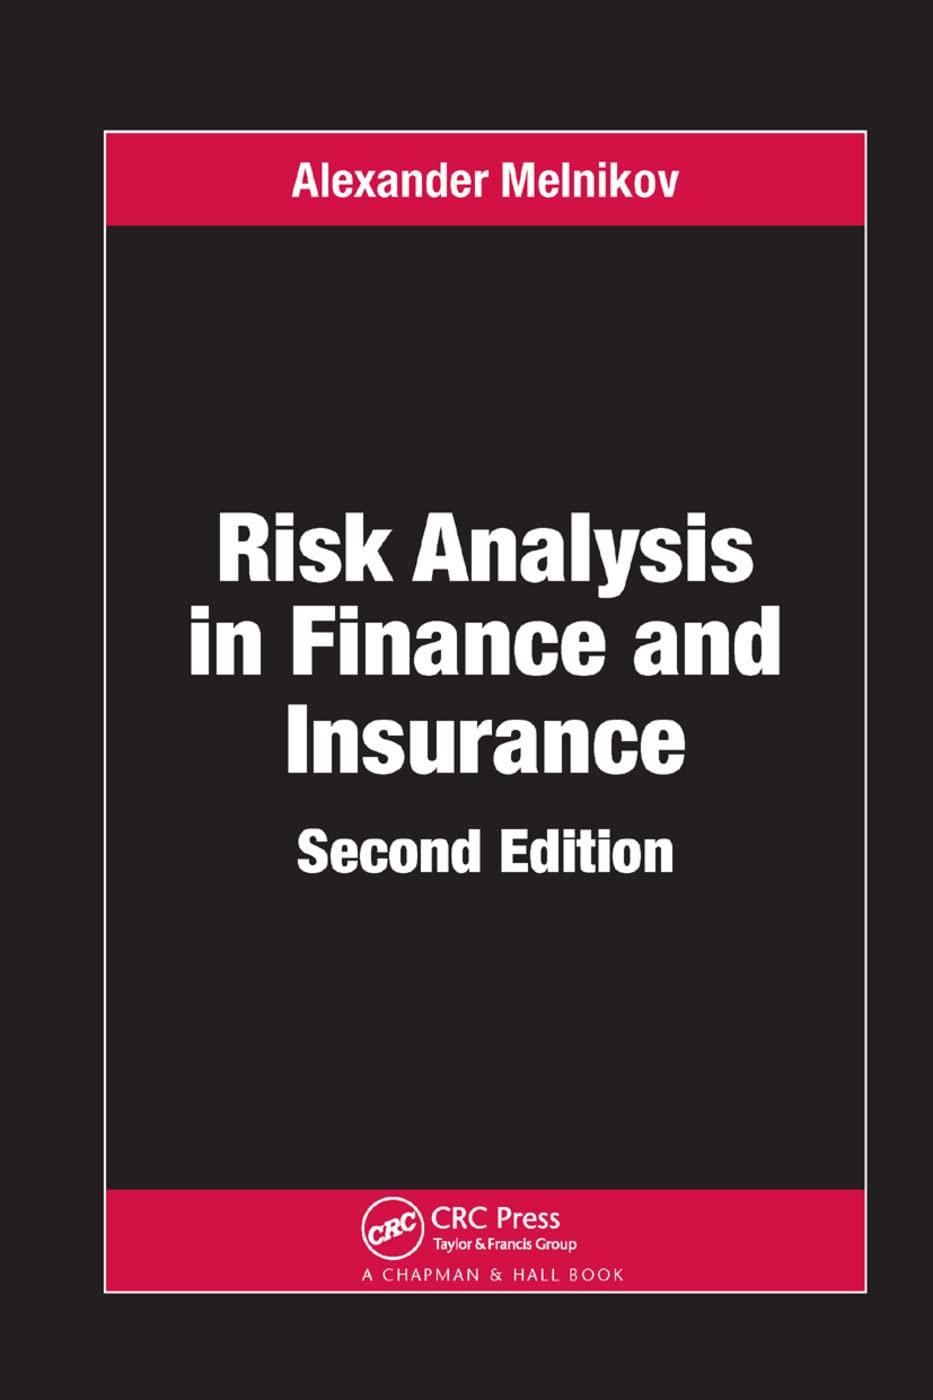 risk analysis in finance and insurance 2nd edition alexander melnikov 0367382865, 978-0367382865